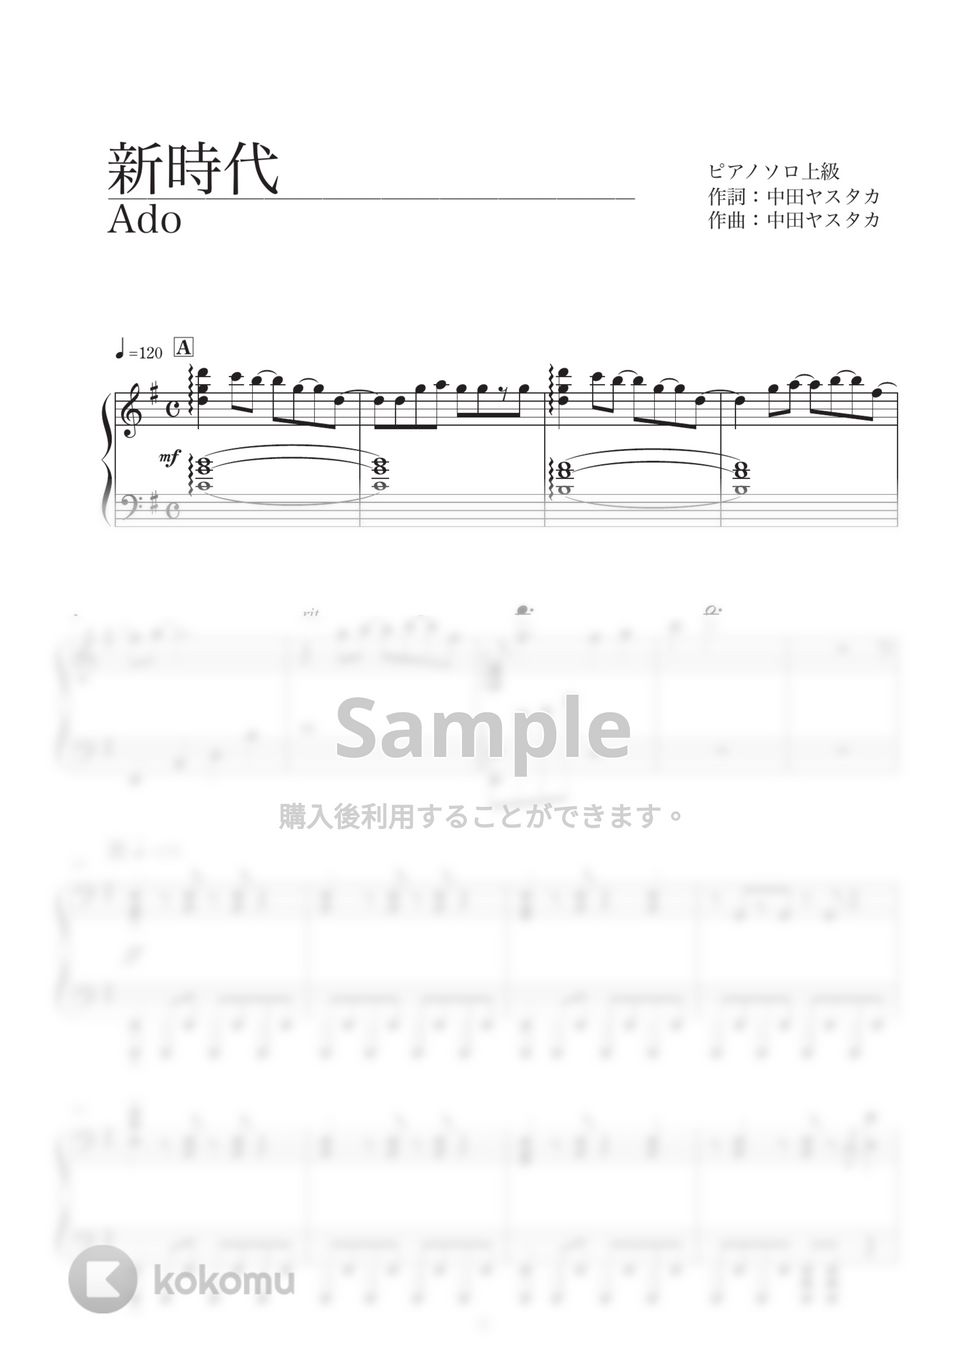 Ado - 新時代 by HARU KOBA